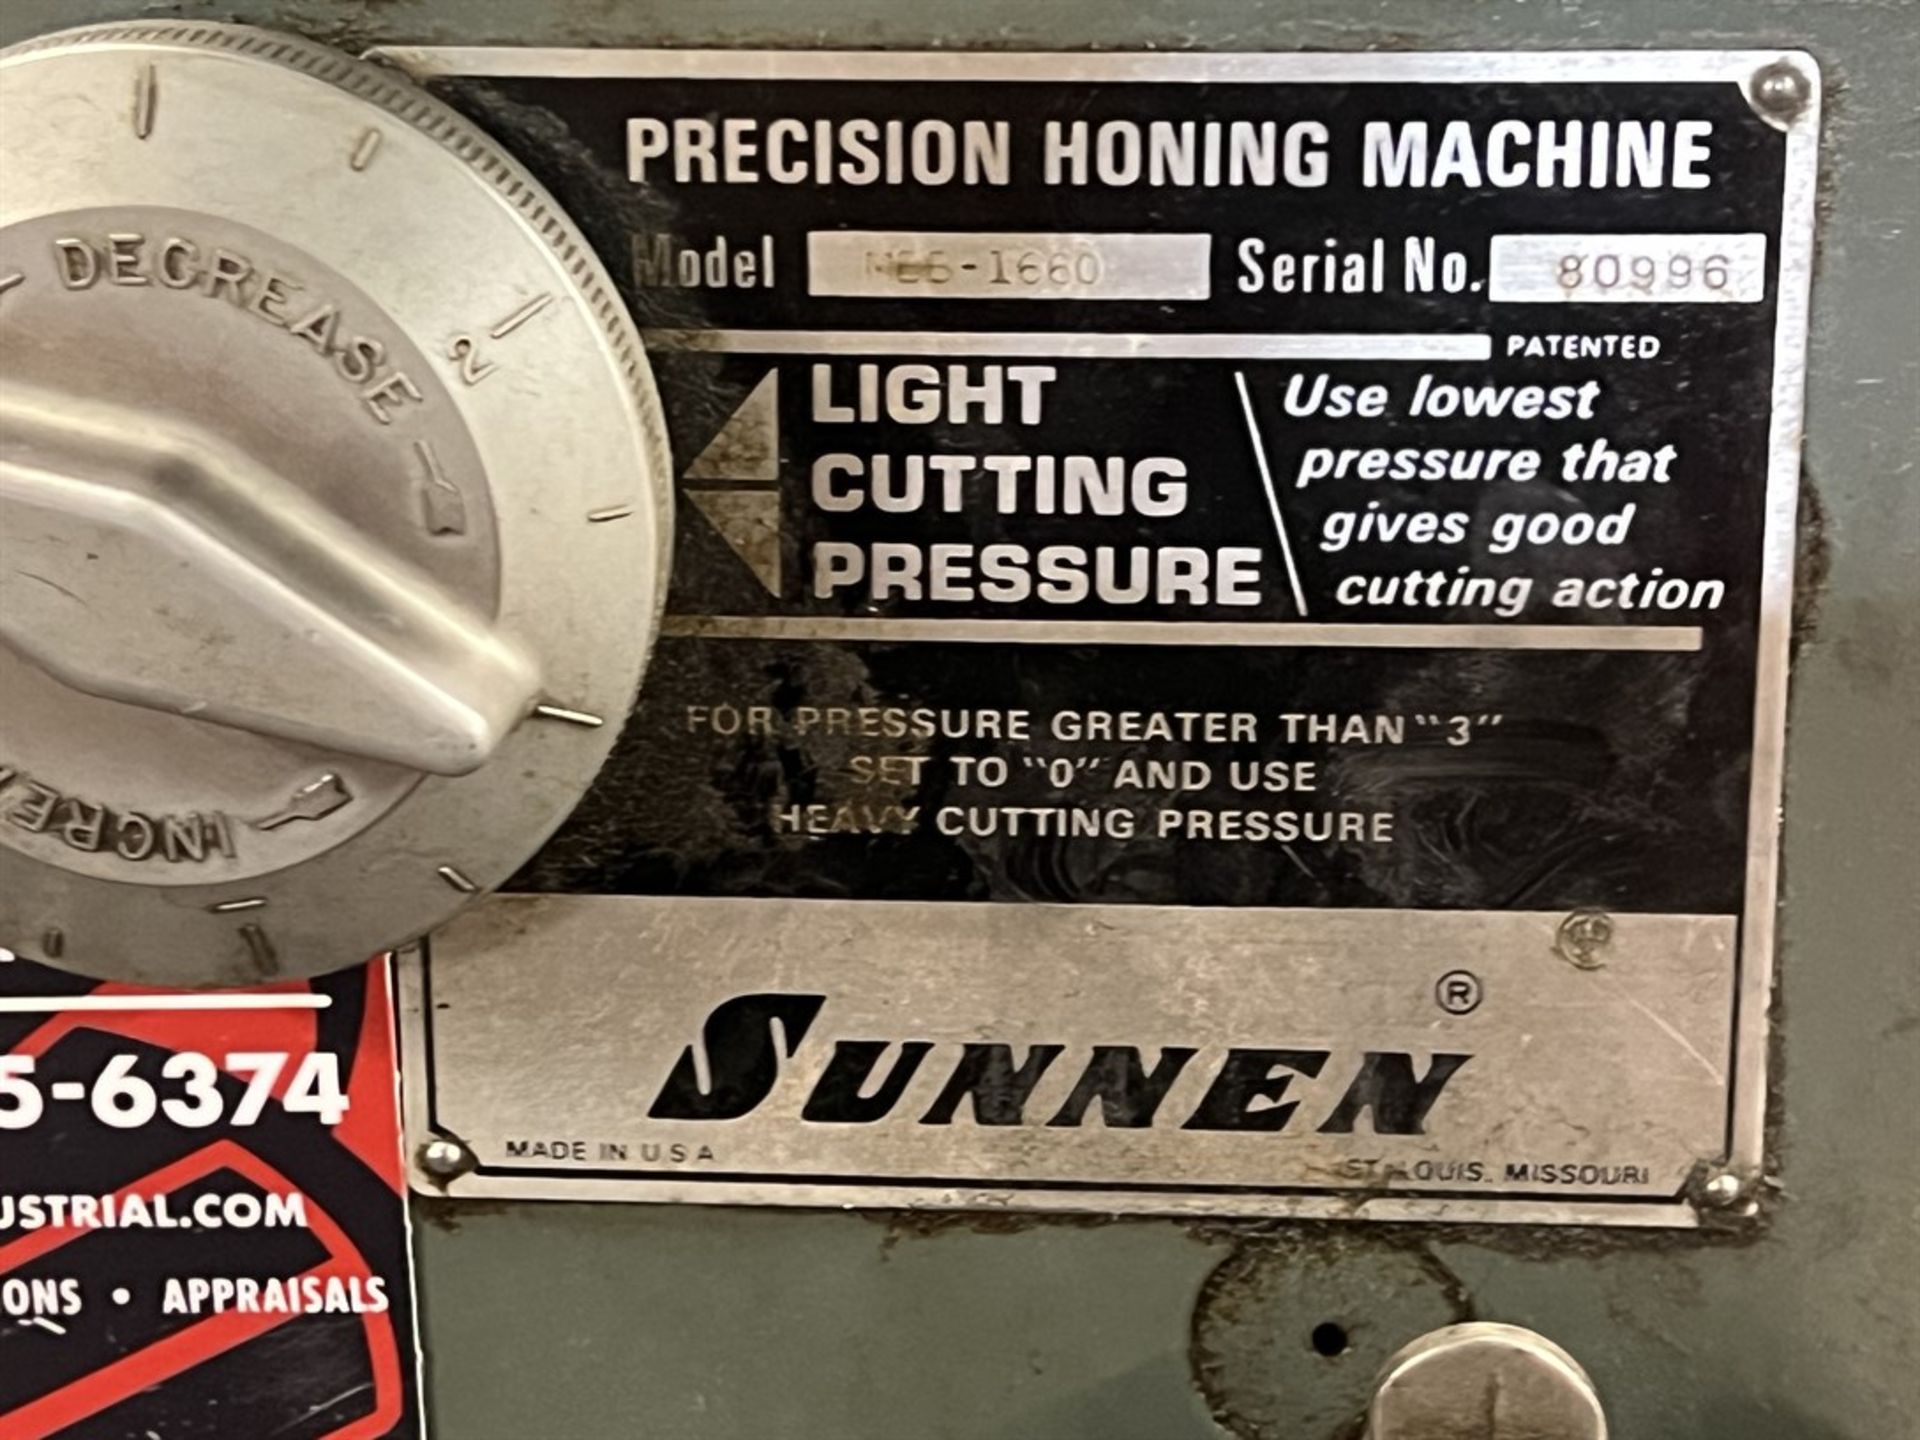 SUNNEN MBB-1660 Precision Honing Machine, s/n 80996 - Image 6 of 6